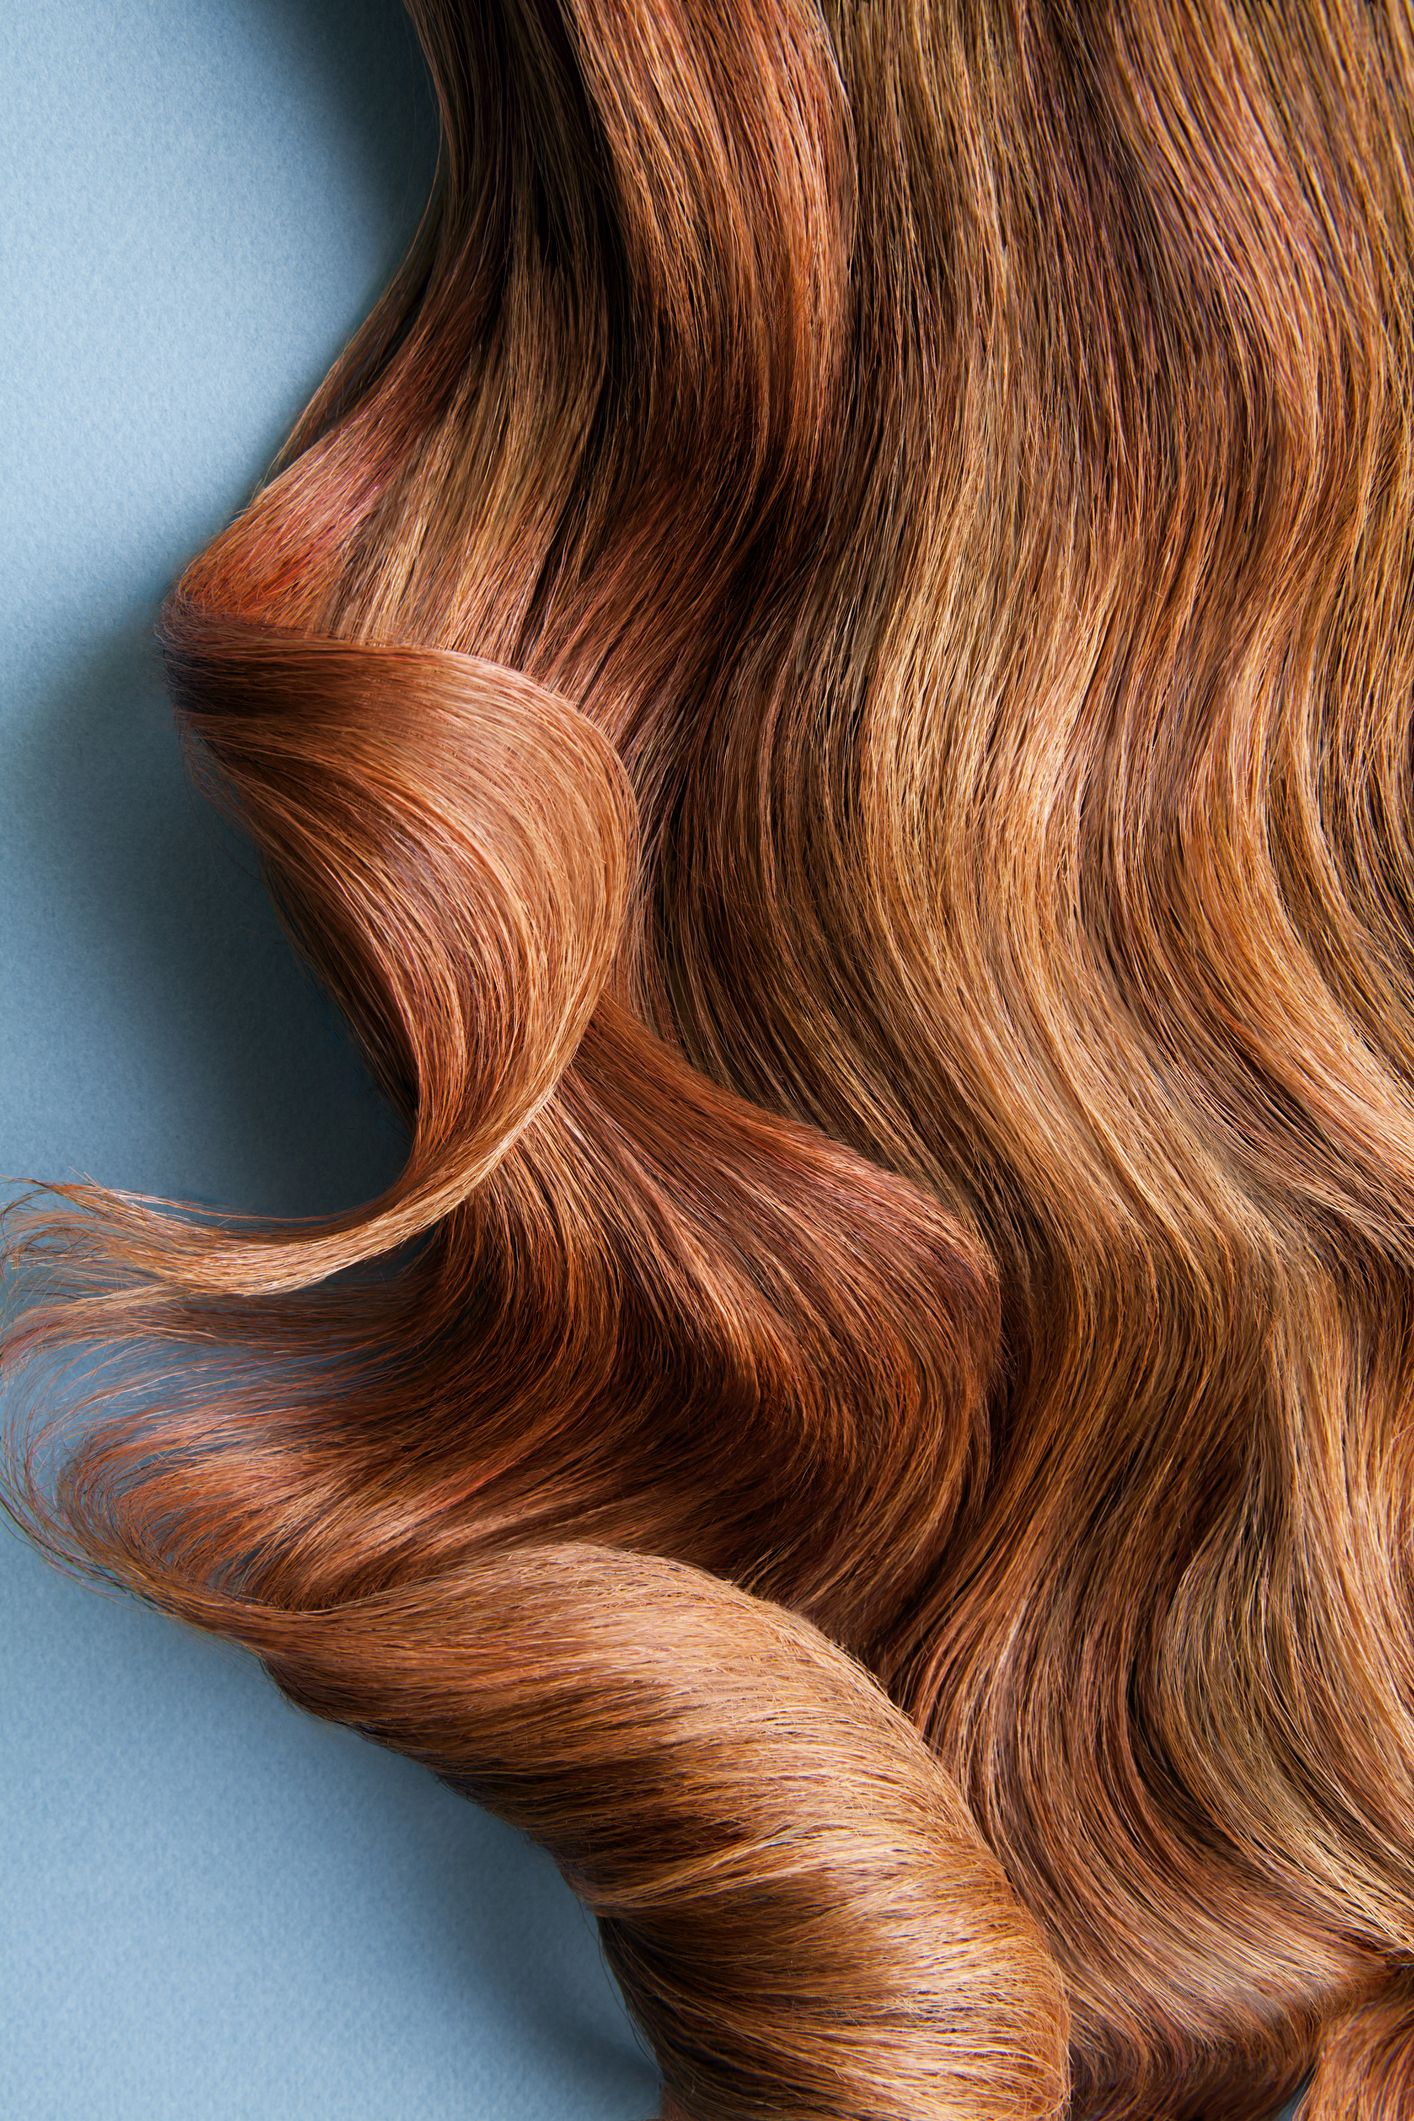 50 Perm Hair Ideas That Will Rock Your Looks - Hair Adviser